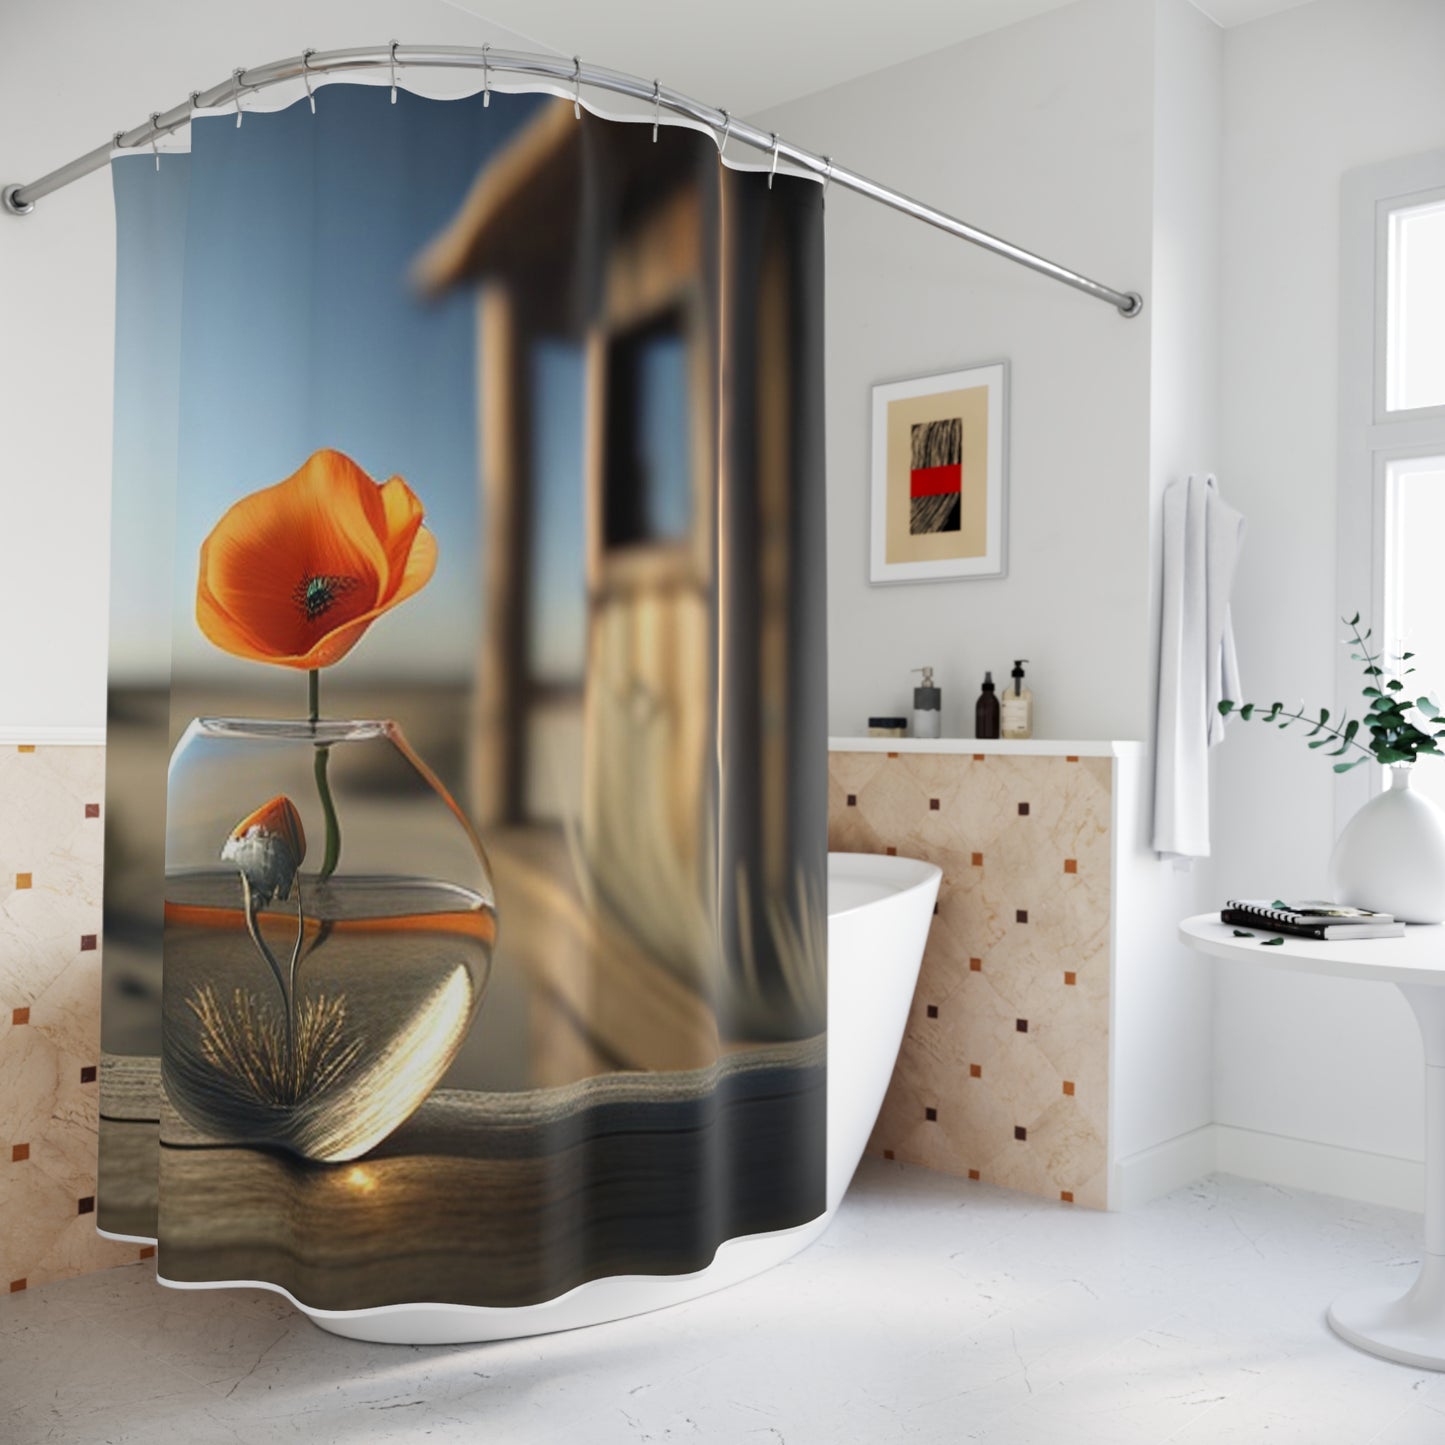 Polyester Shower Curtain Orange Poppy in a Vase 1